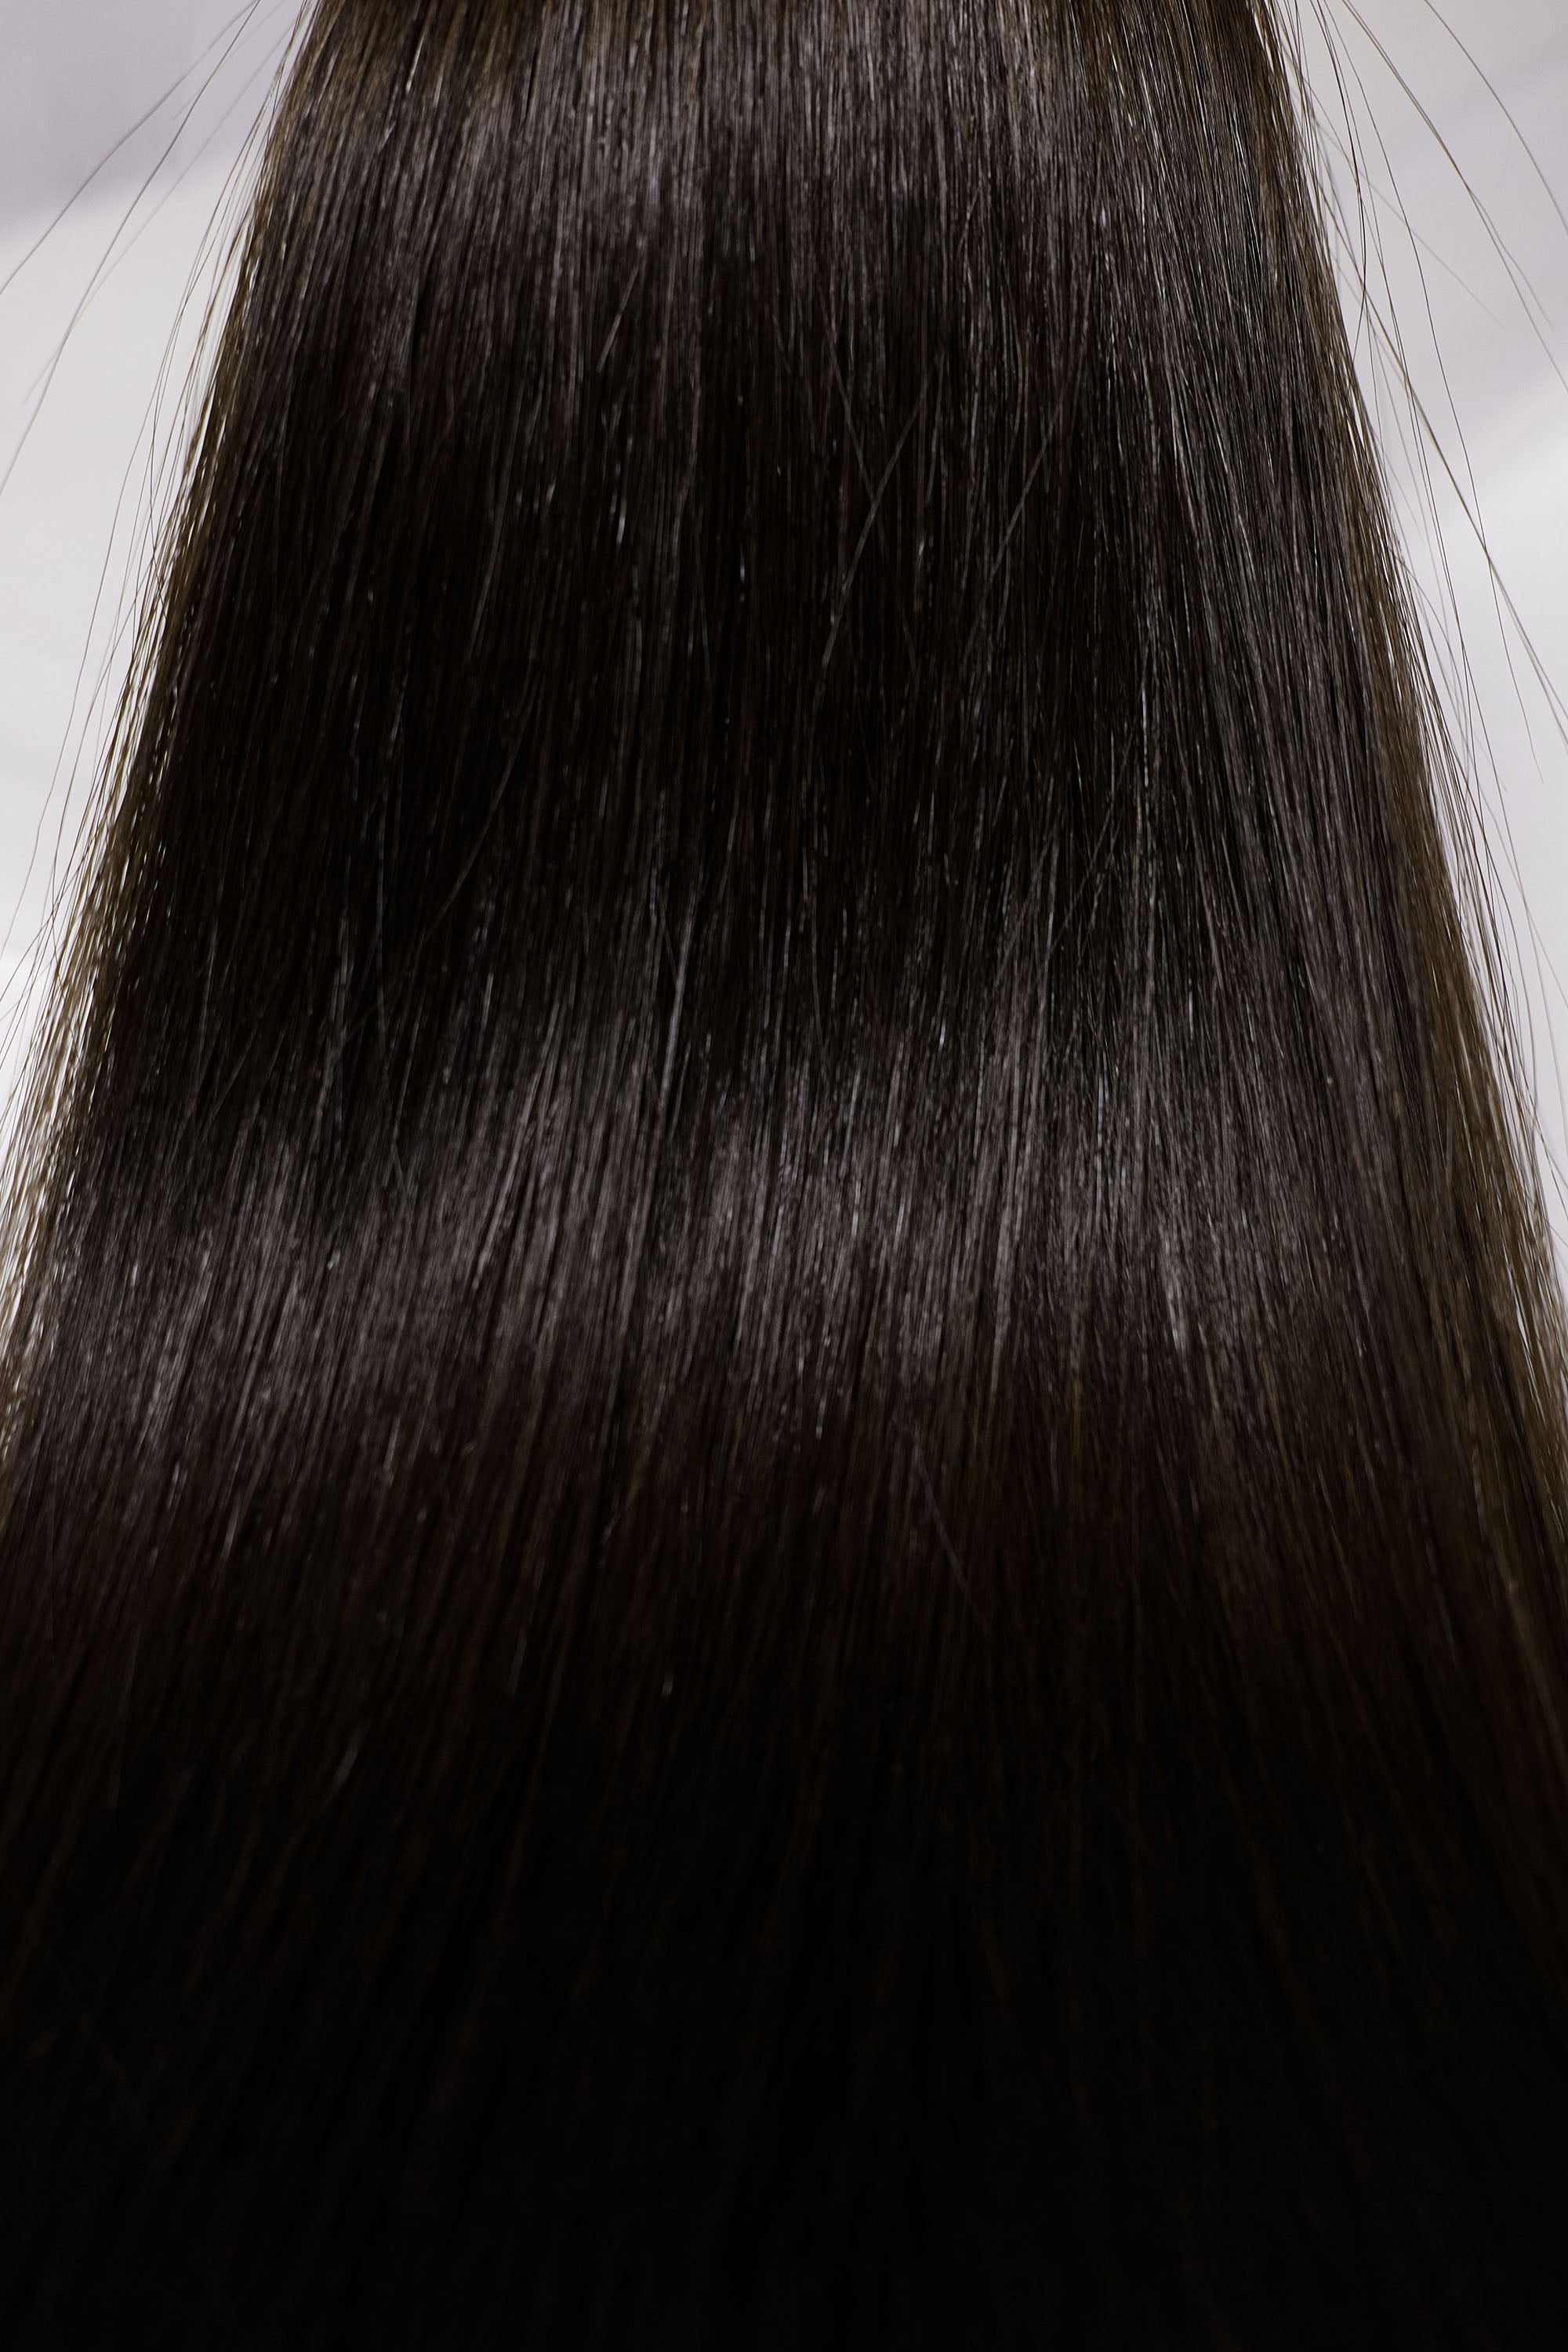 Behair professional Keratin Tip "Premium" 22" (55cm) Natural Straight Natural Black #1B - 25g (1g each pcs) hair extensions